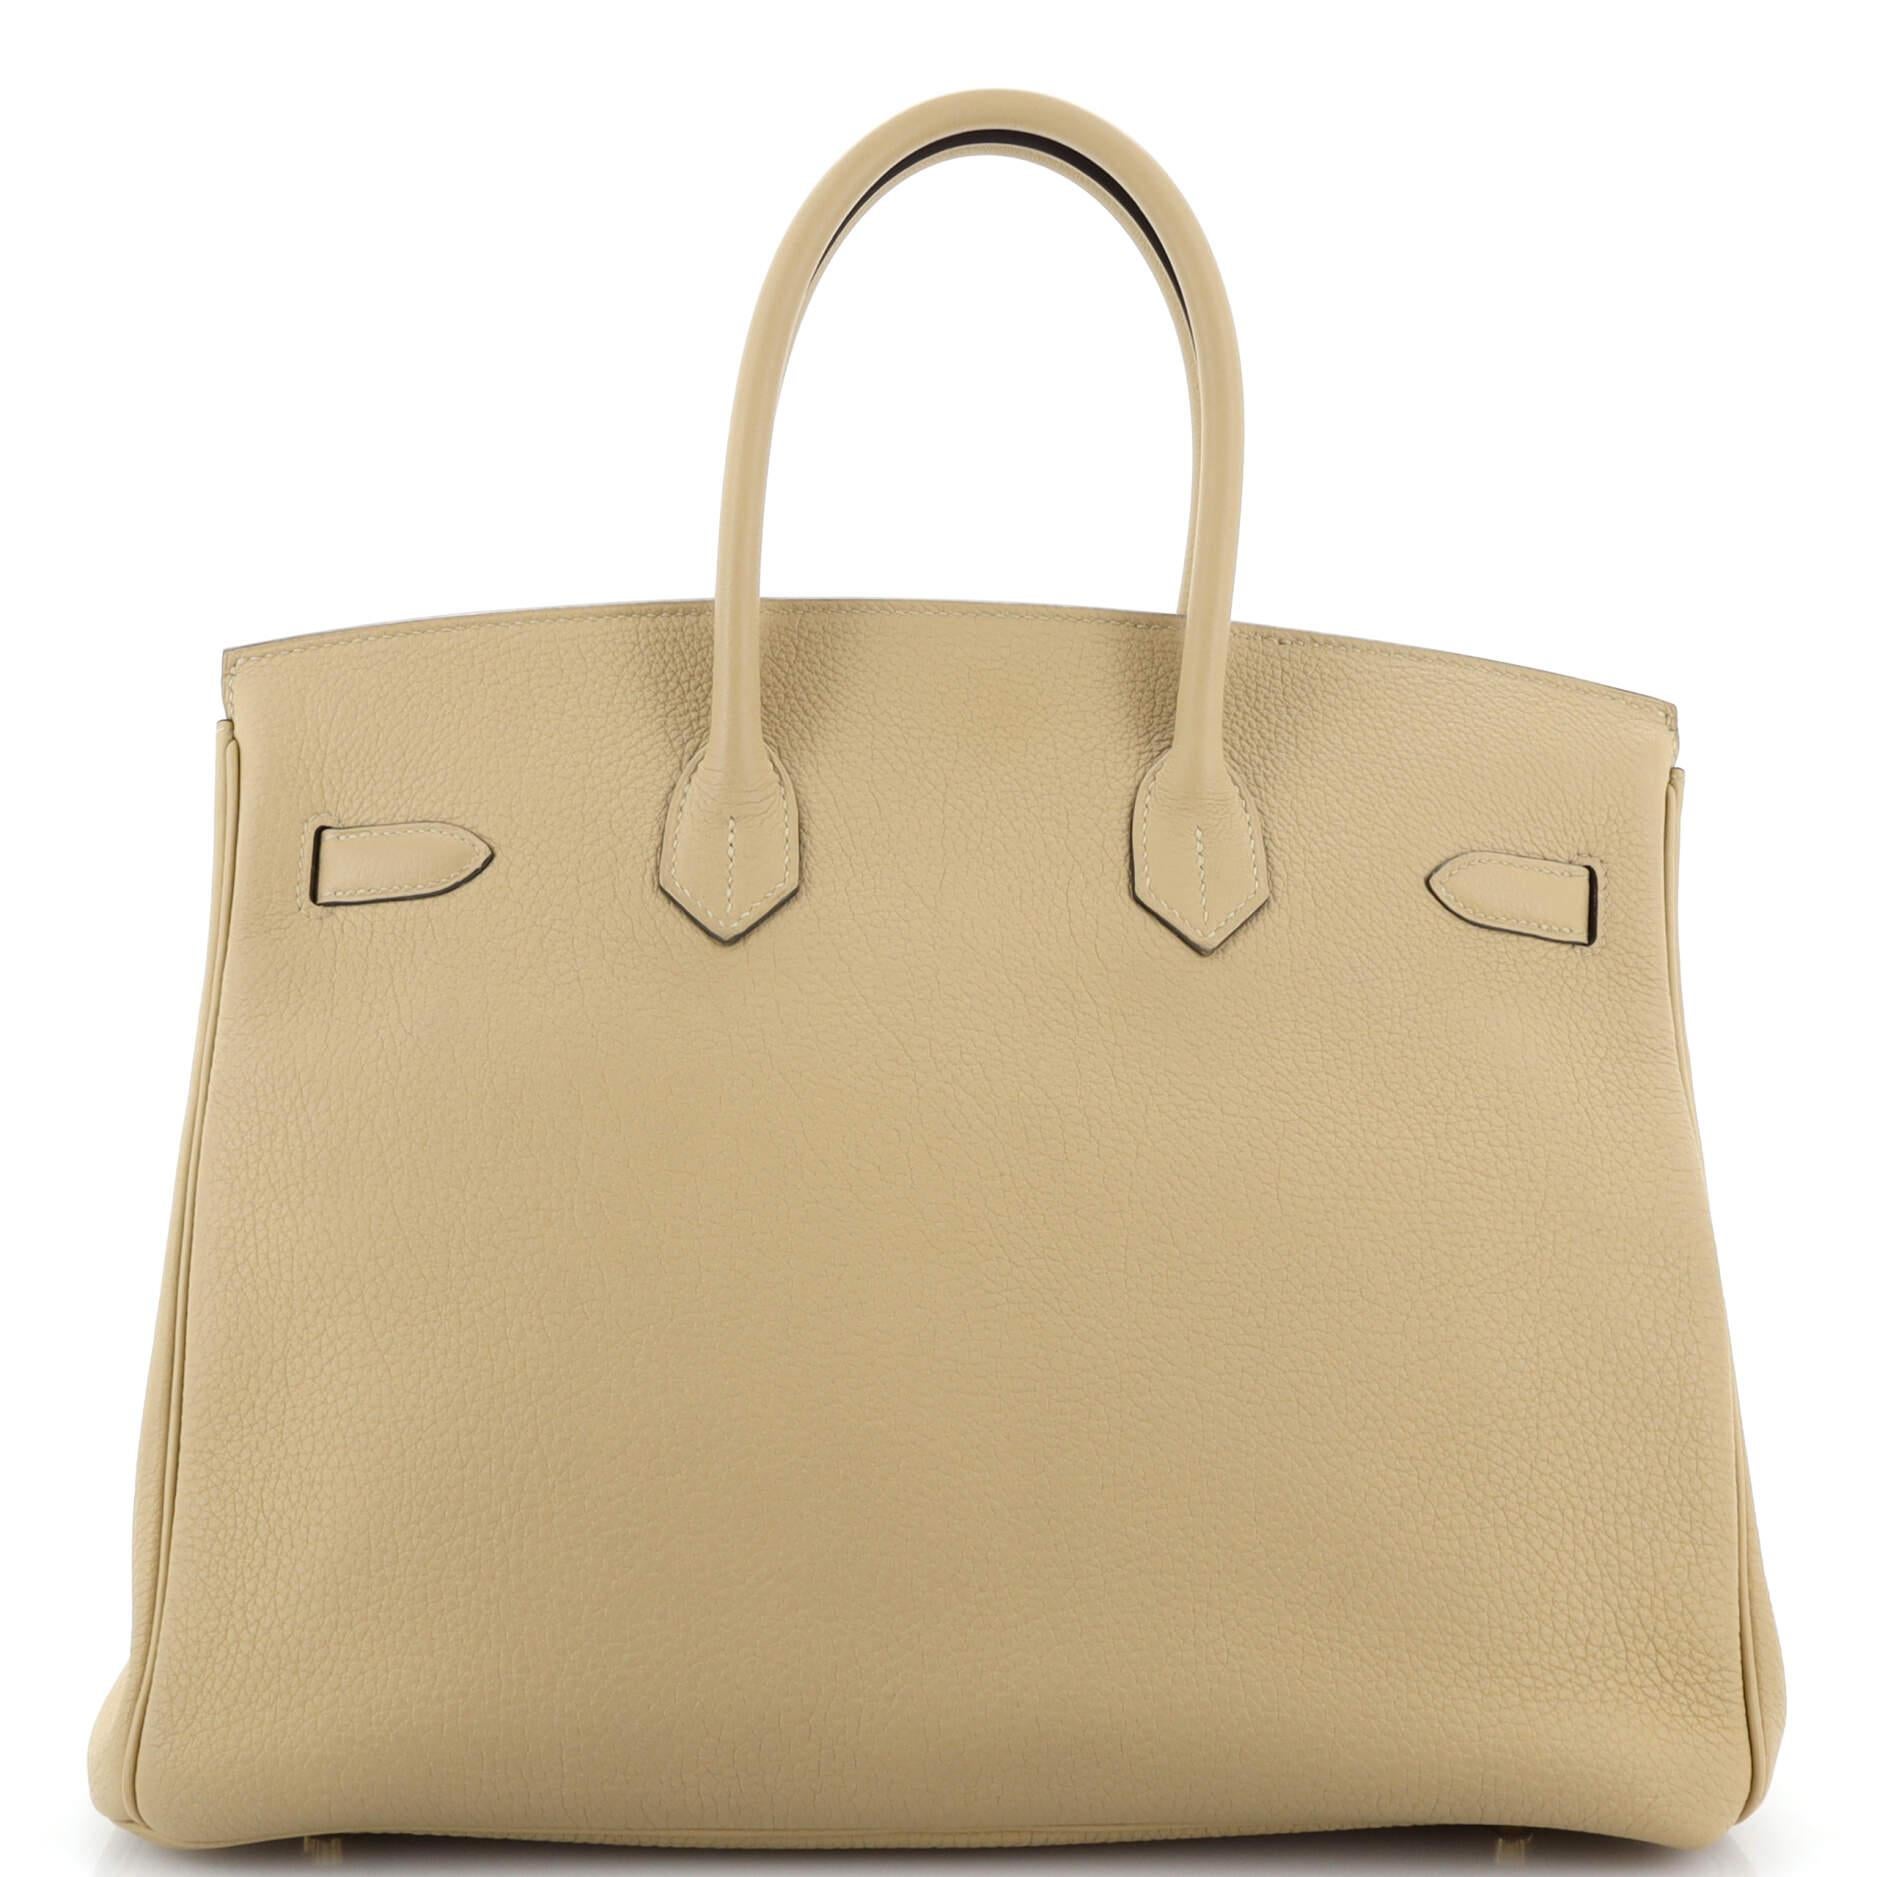 Women's Hermes Birkin Handbag Light Togo with Gold Hardware 35